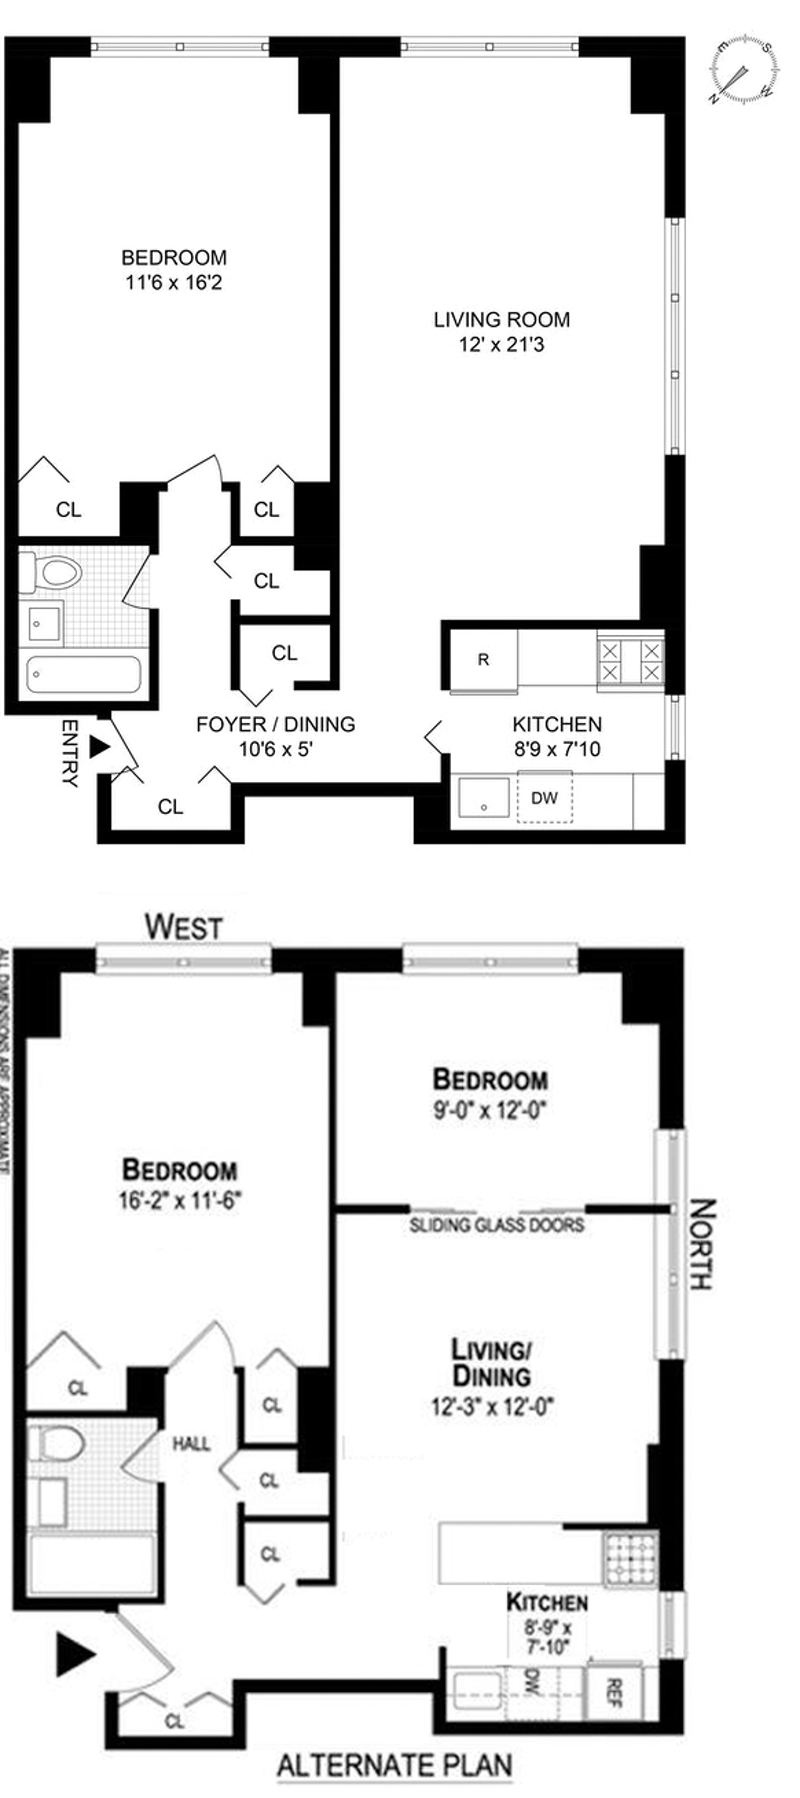 Floorplan for 330 Third Avenue, 7B